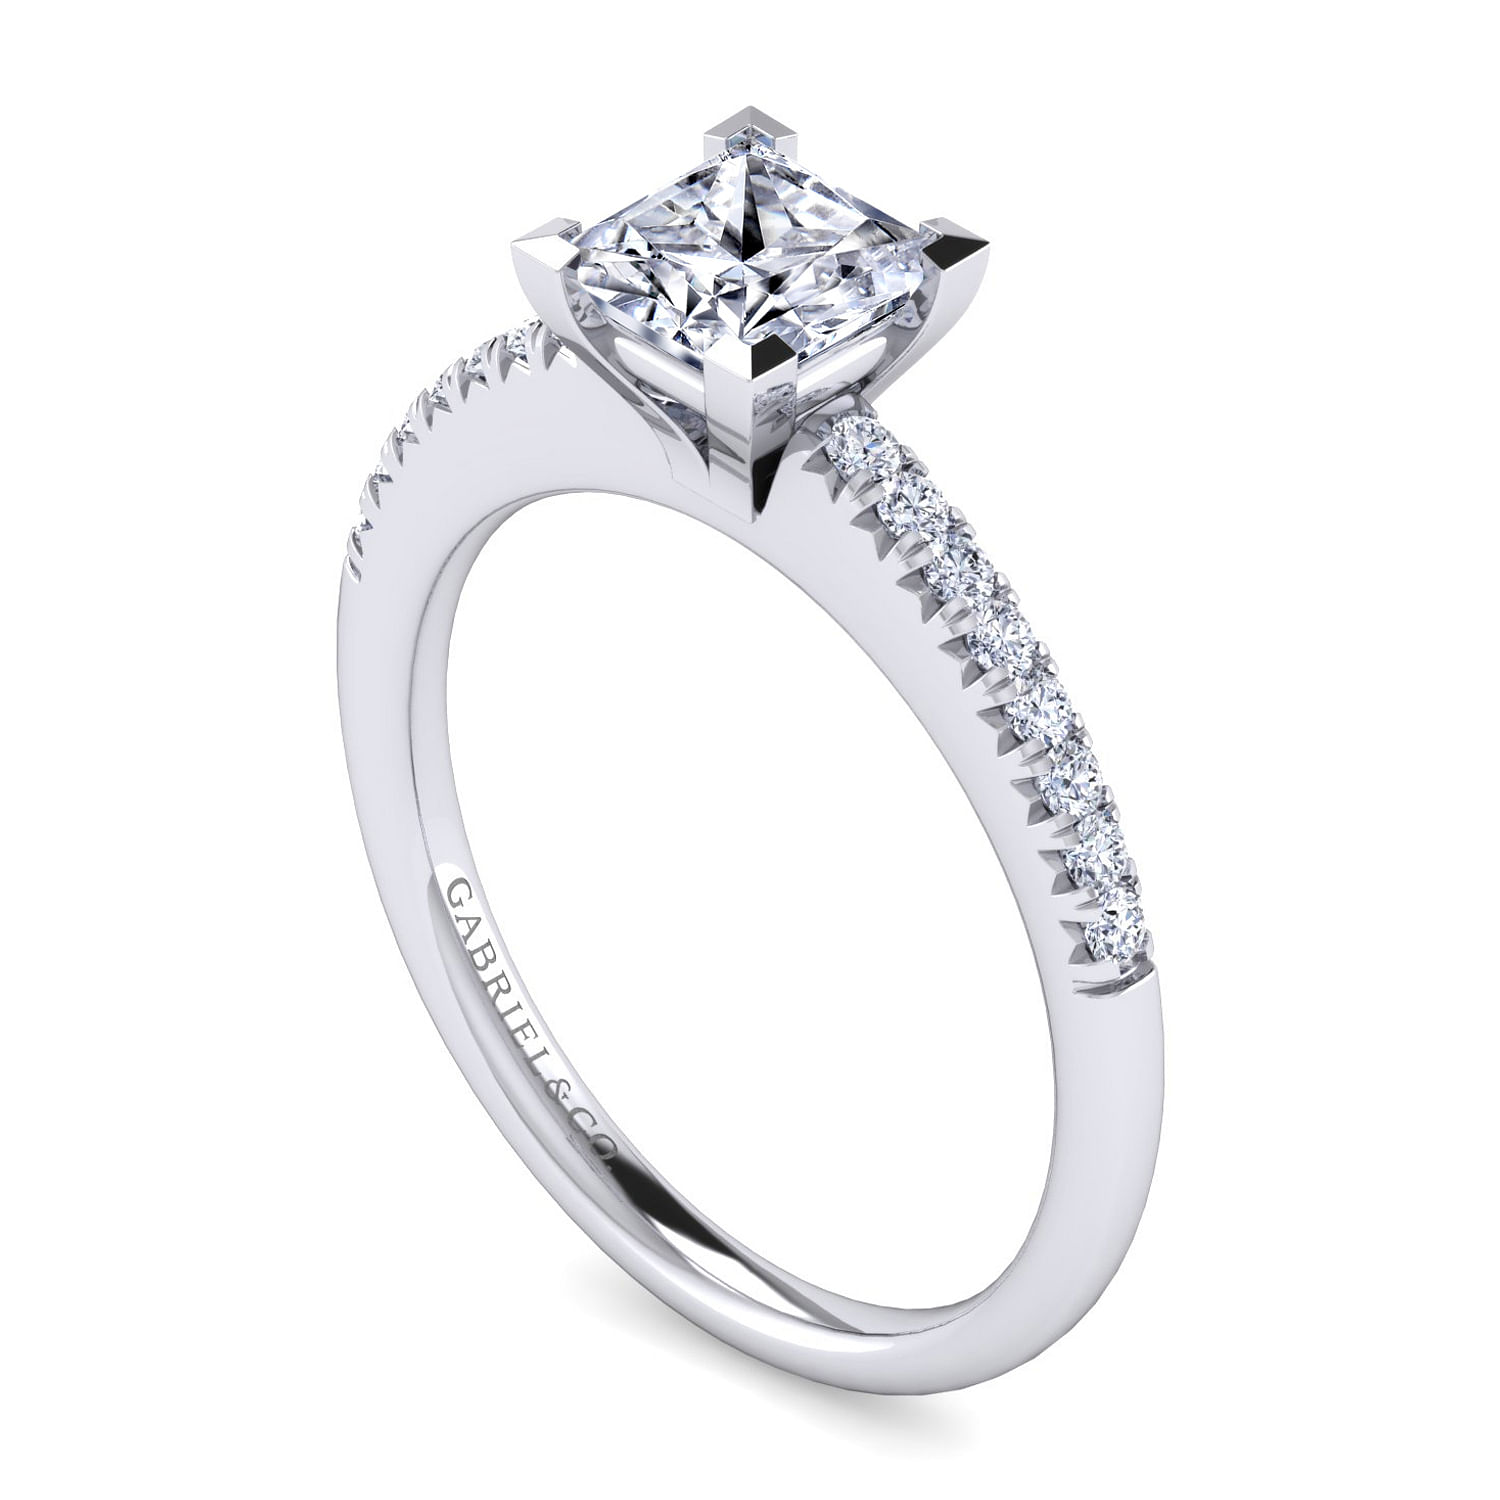 Kelly - 14K White Gold Princess Cut Diamond Engagement Ring - 0.15 ct - Shot 3